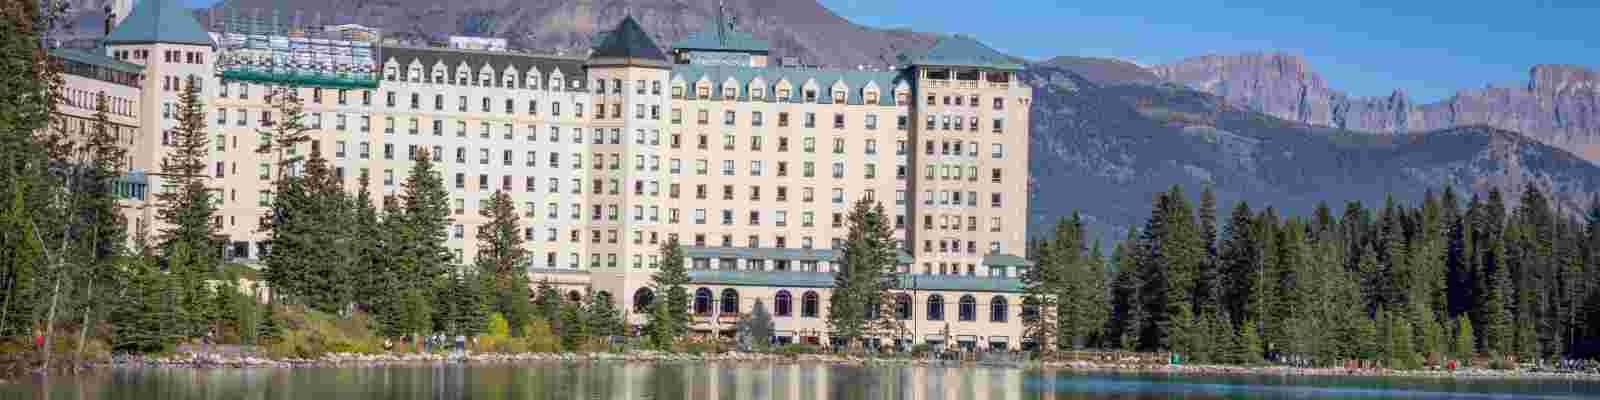 Fairmont Chateau Hotel Lake Louise (photo by SandKumar / Shutterstock.com)